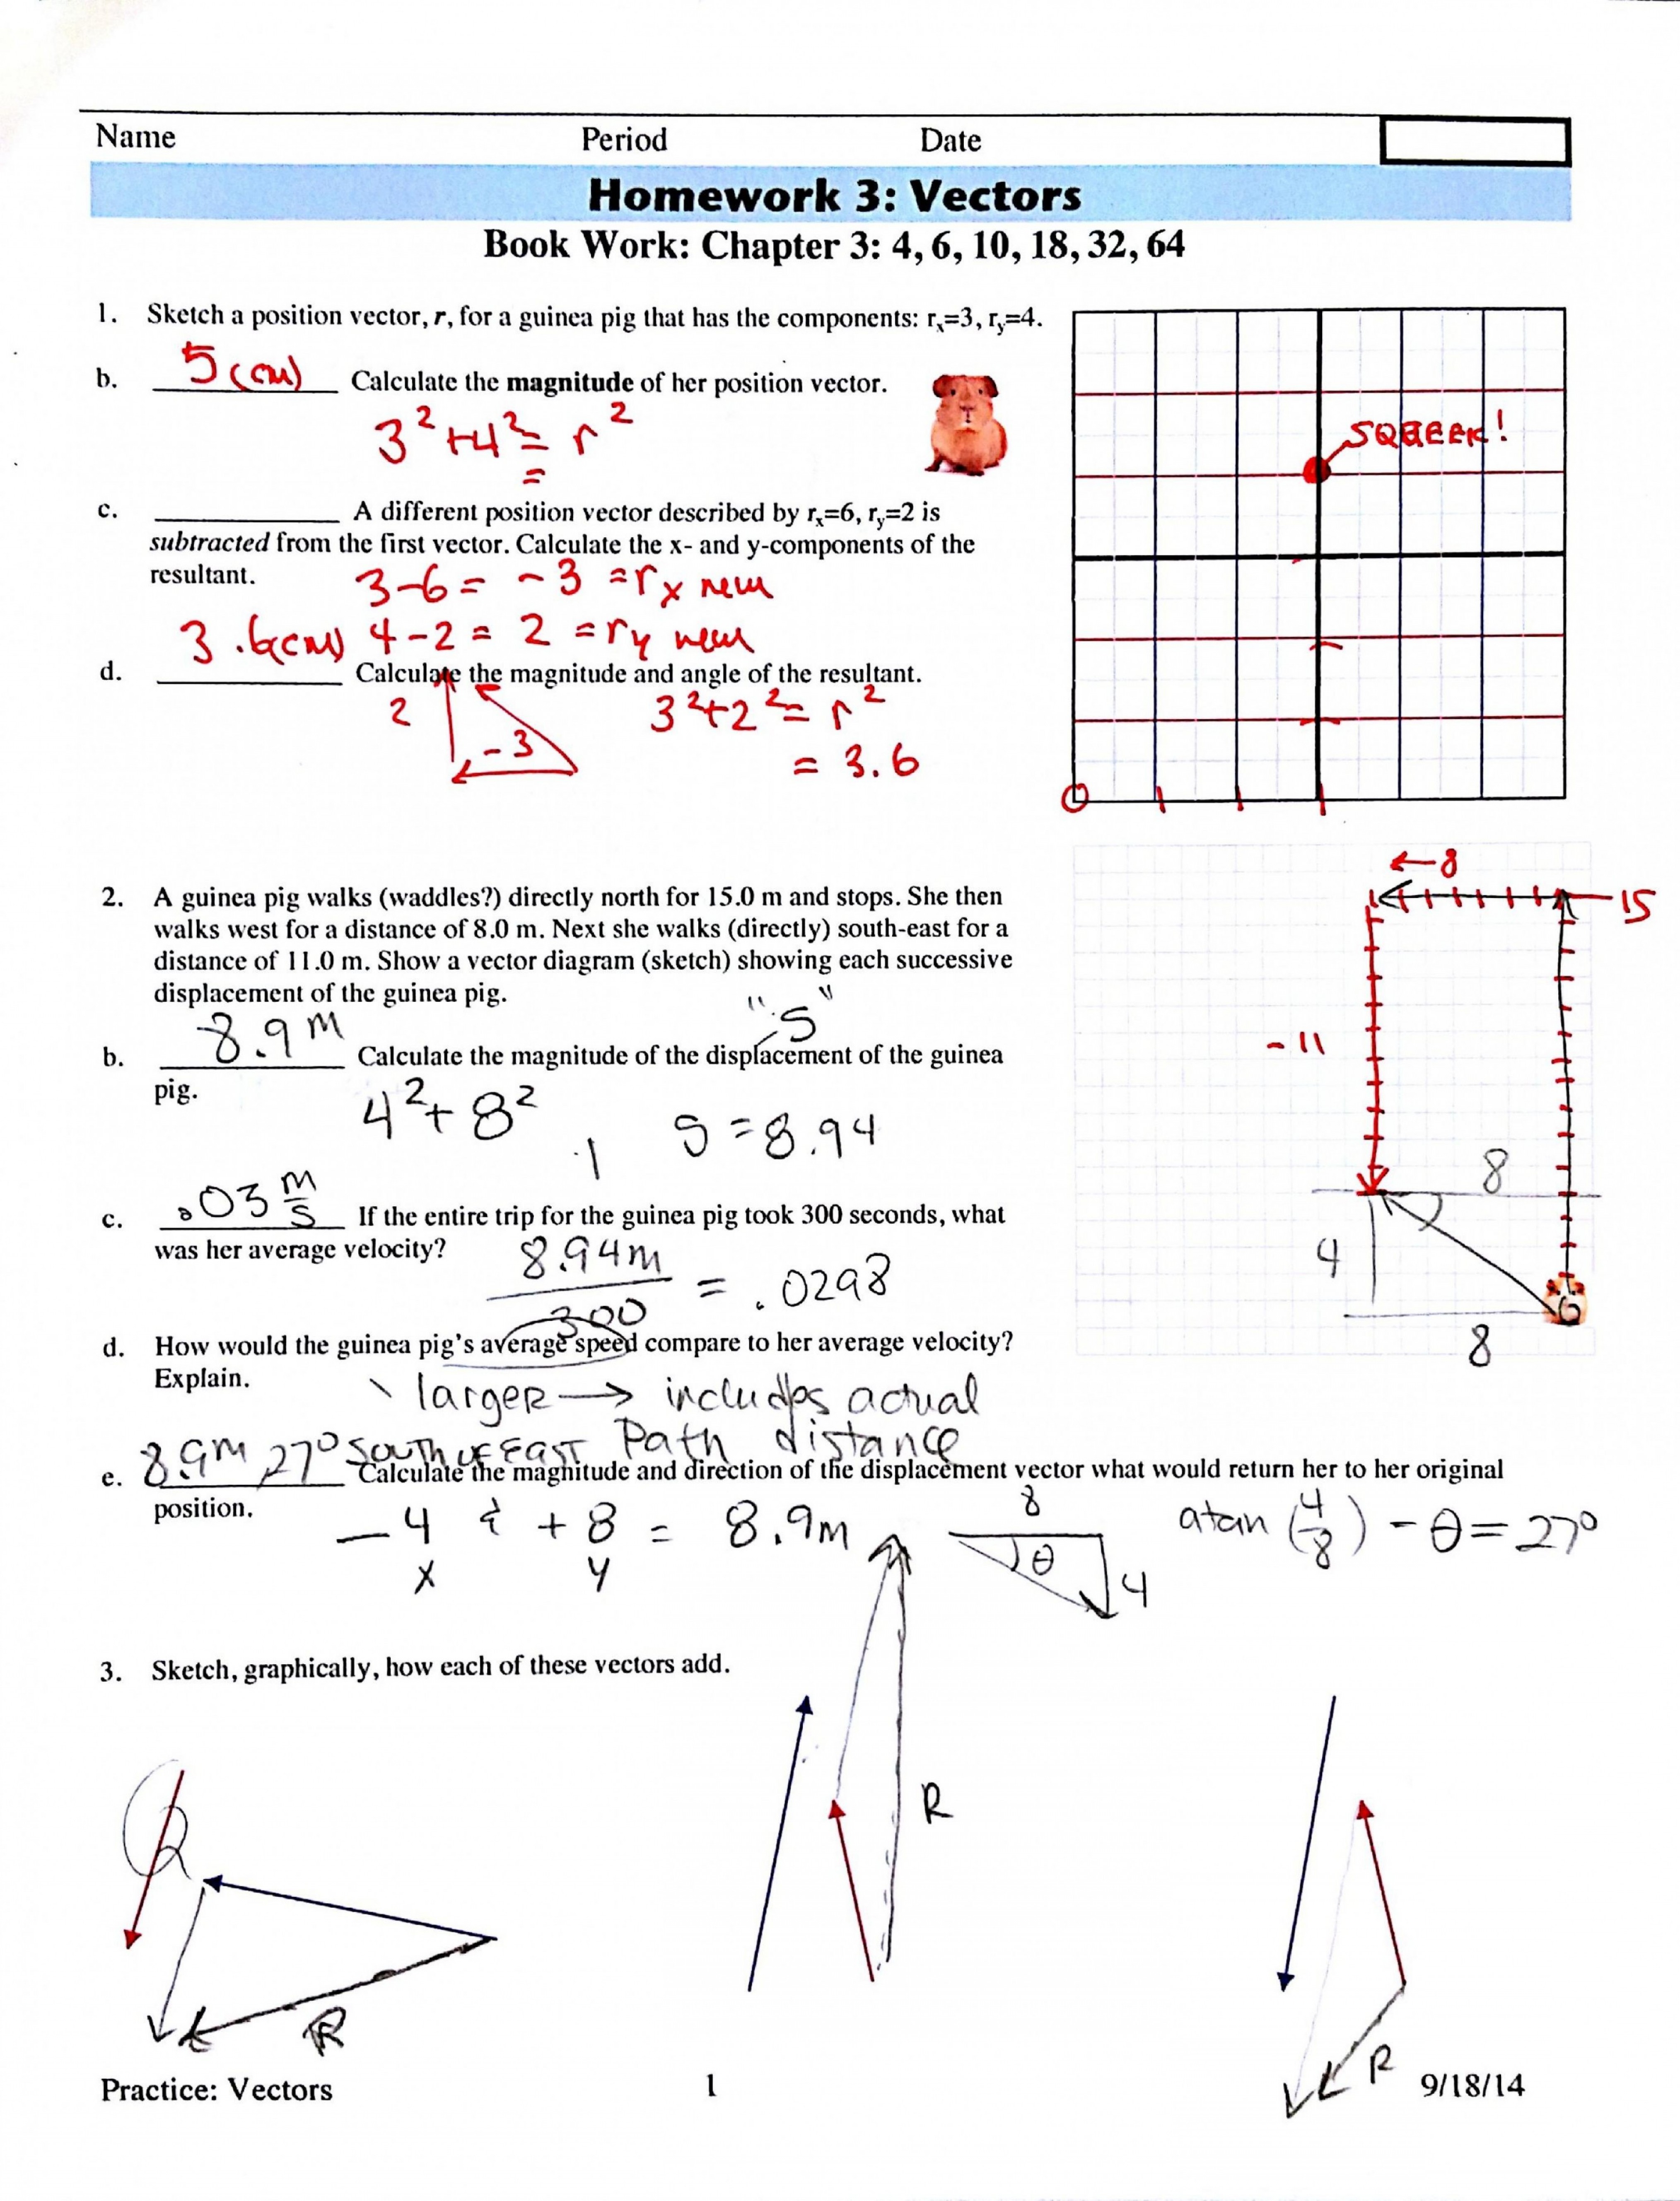 adding-vectors-physics-worksheet